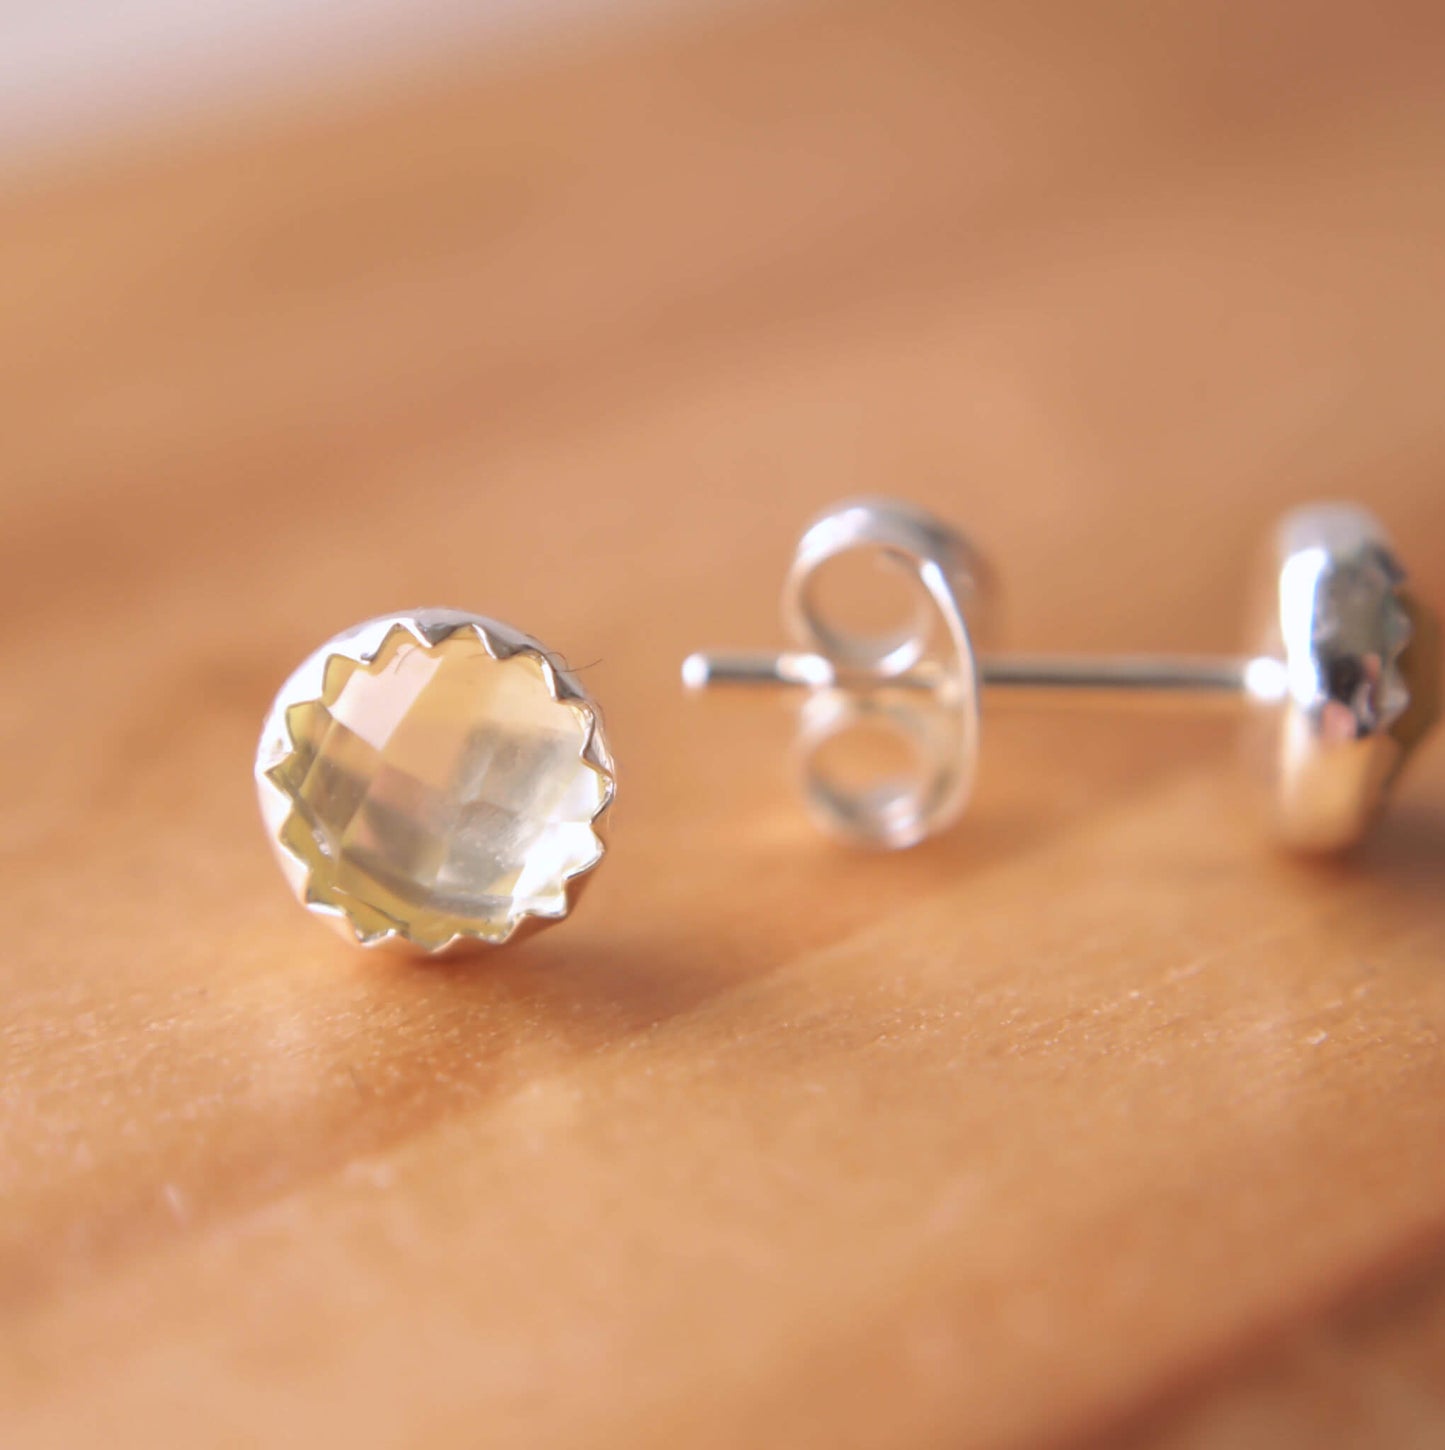 Lemon Yellow Quartz simple Silver and gemstone earrings in a simple sterling silver setting, handmade by maram jewellery in Edinburgh Scotland UK